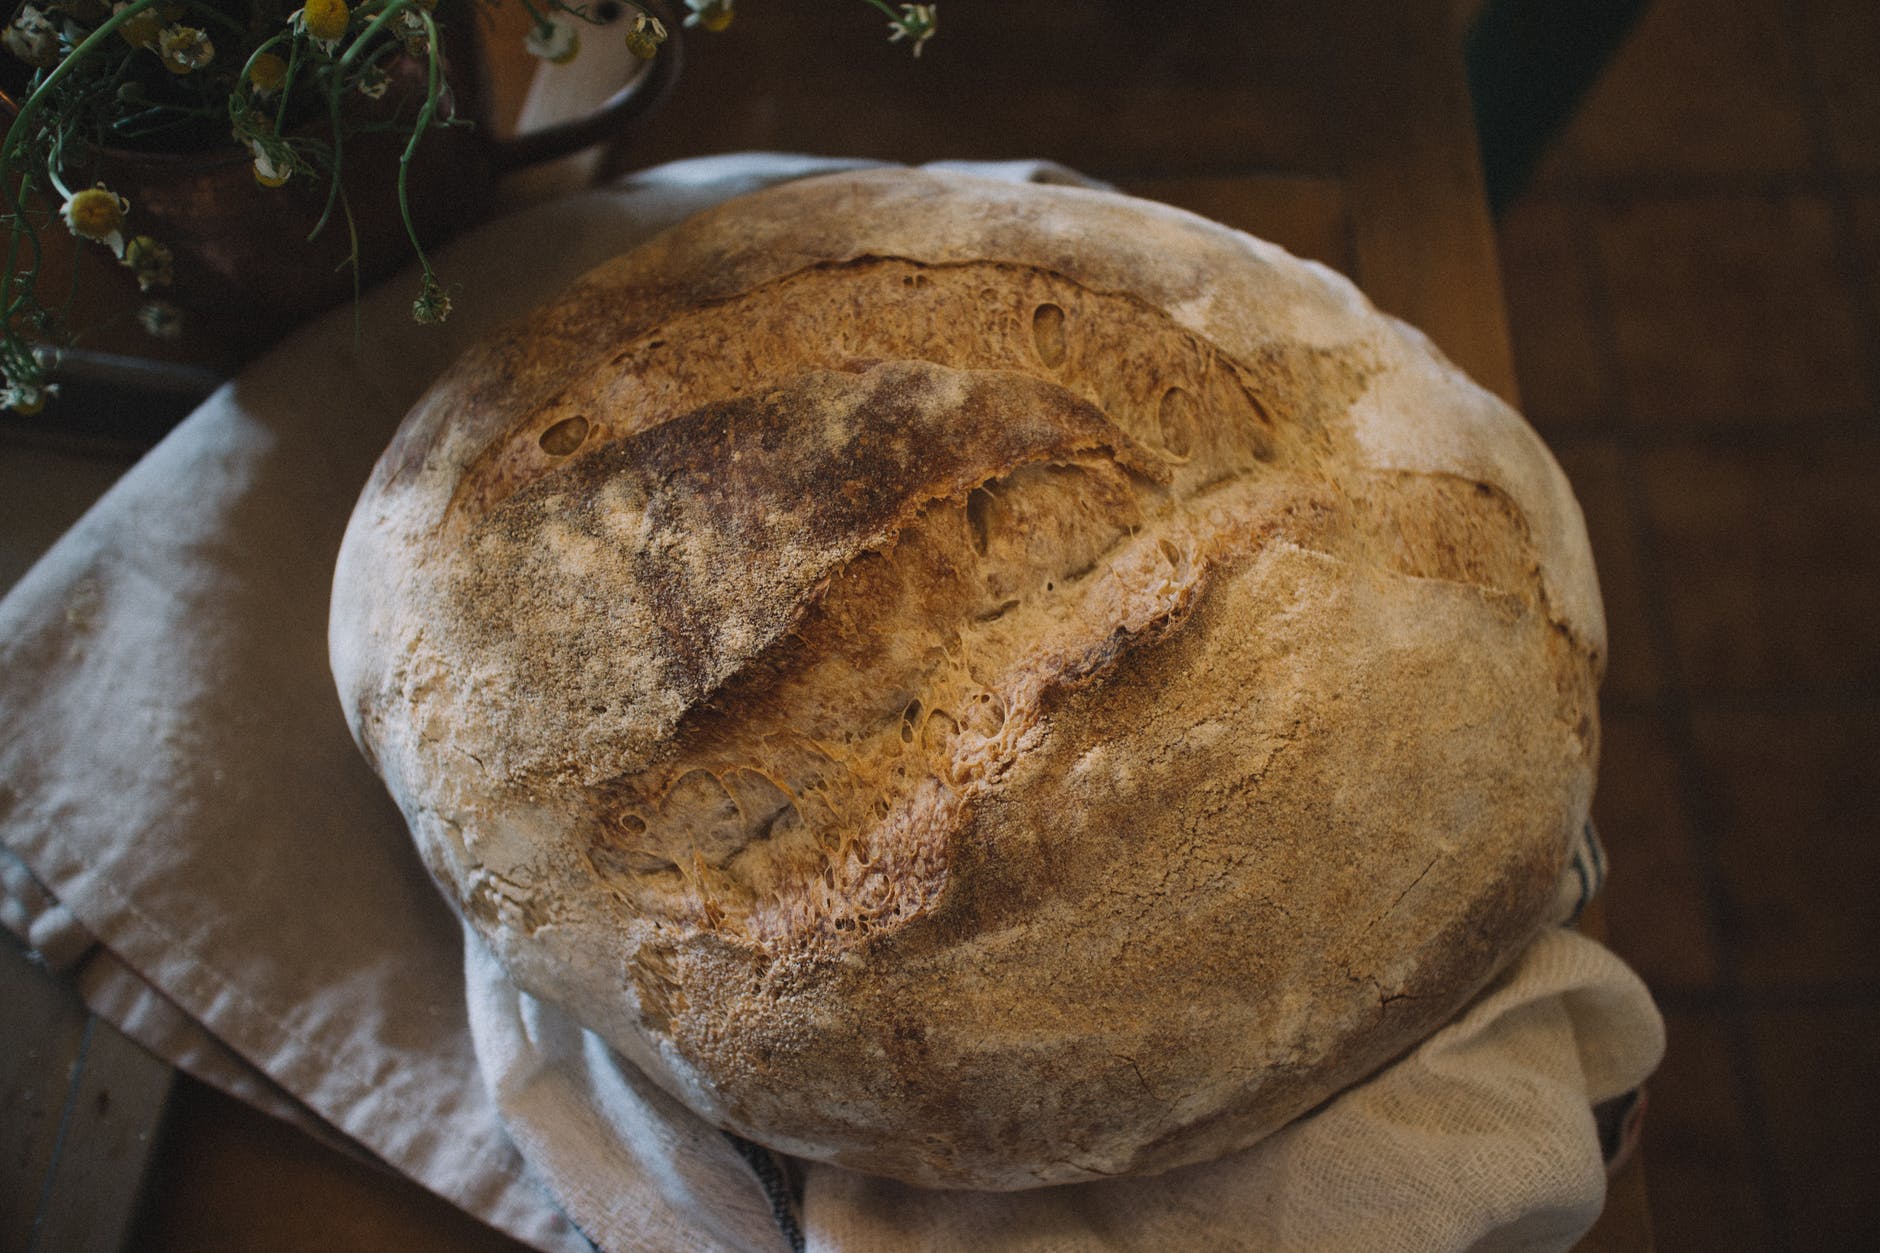 Photo of a homemade loaf of sourdough bread by Monserrat Soldu00fa on Pexels.com